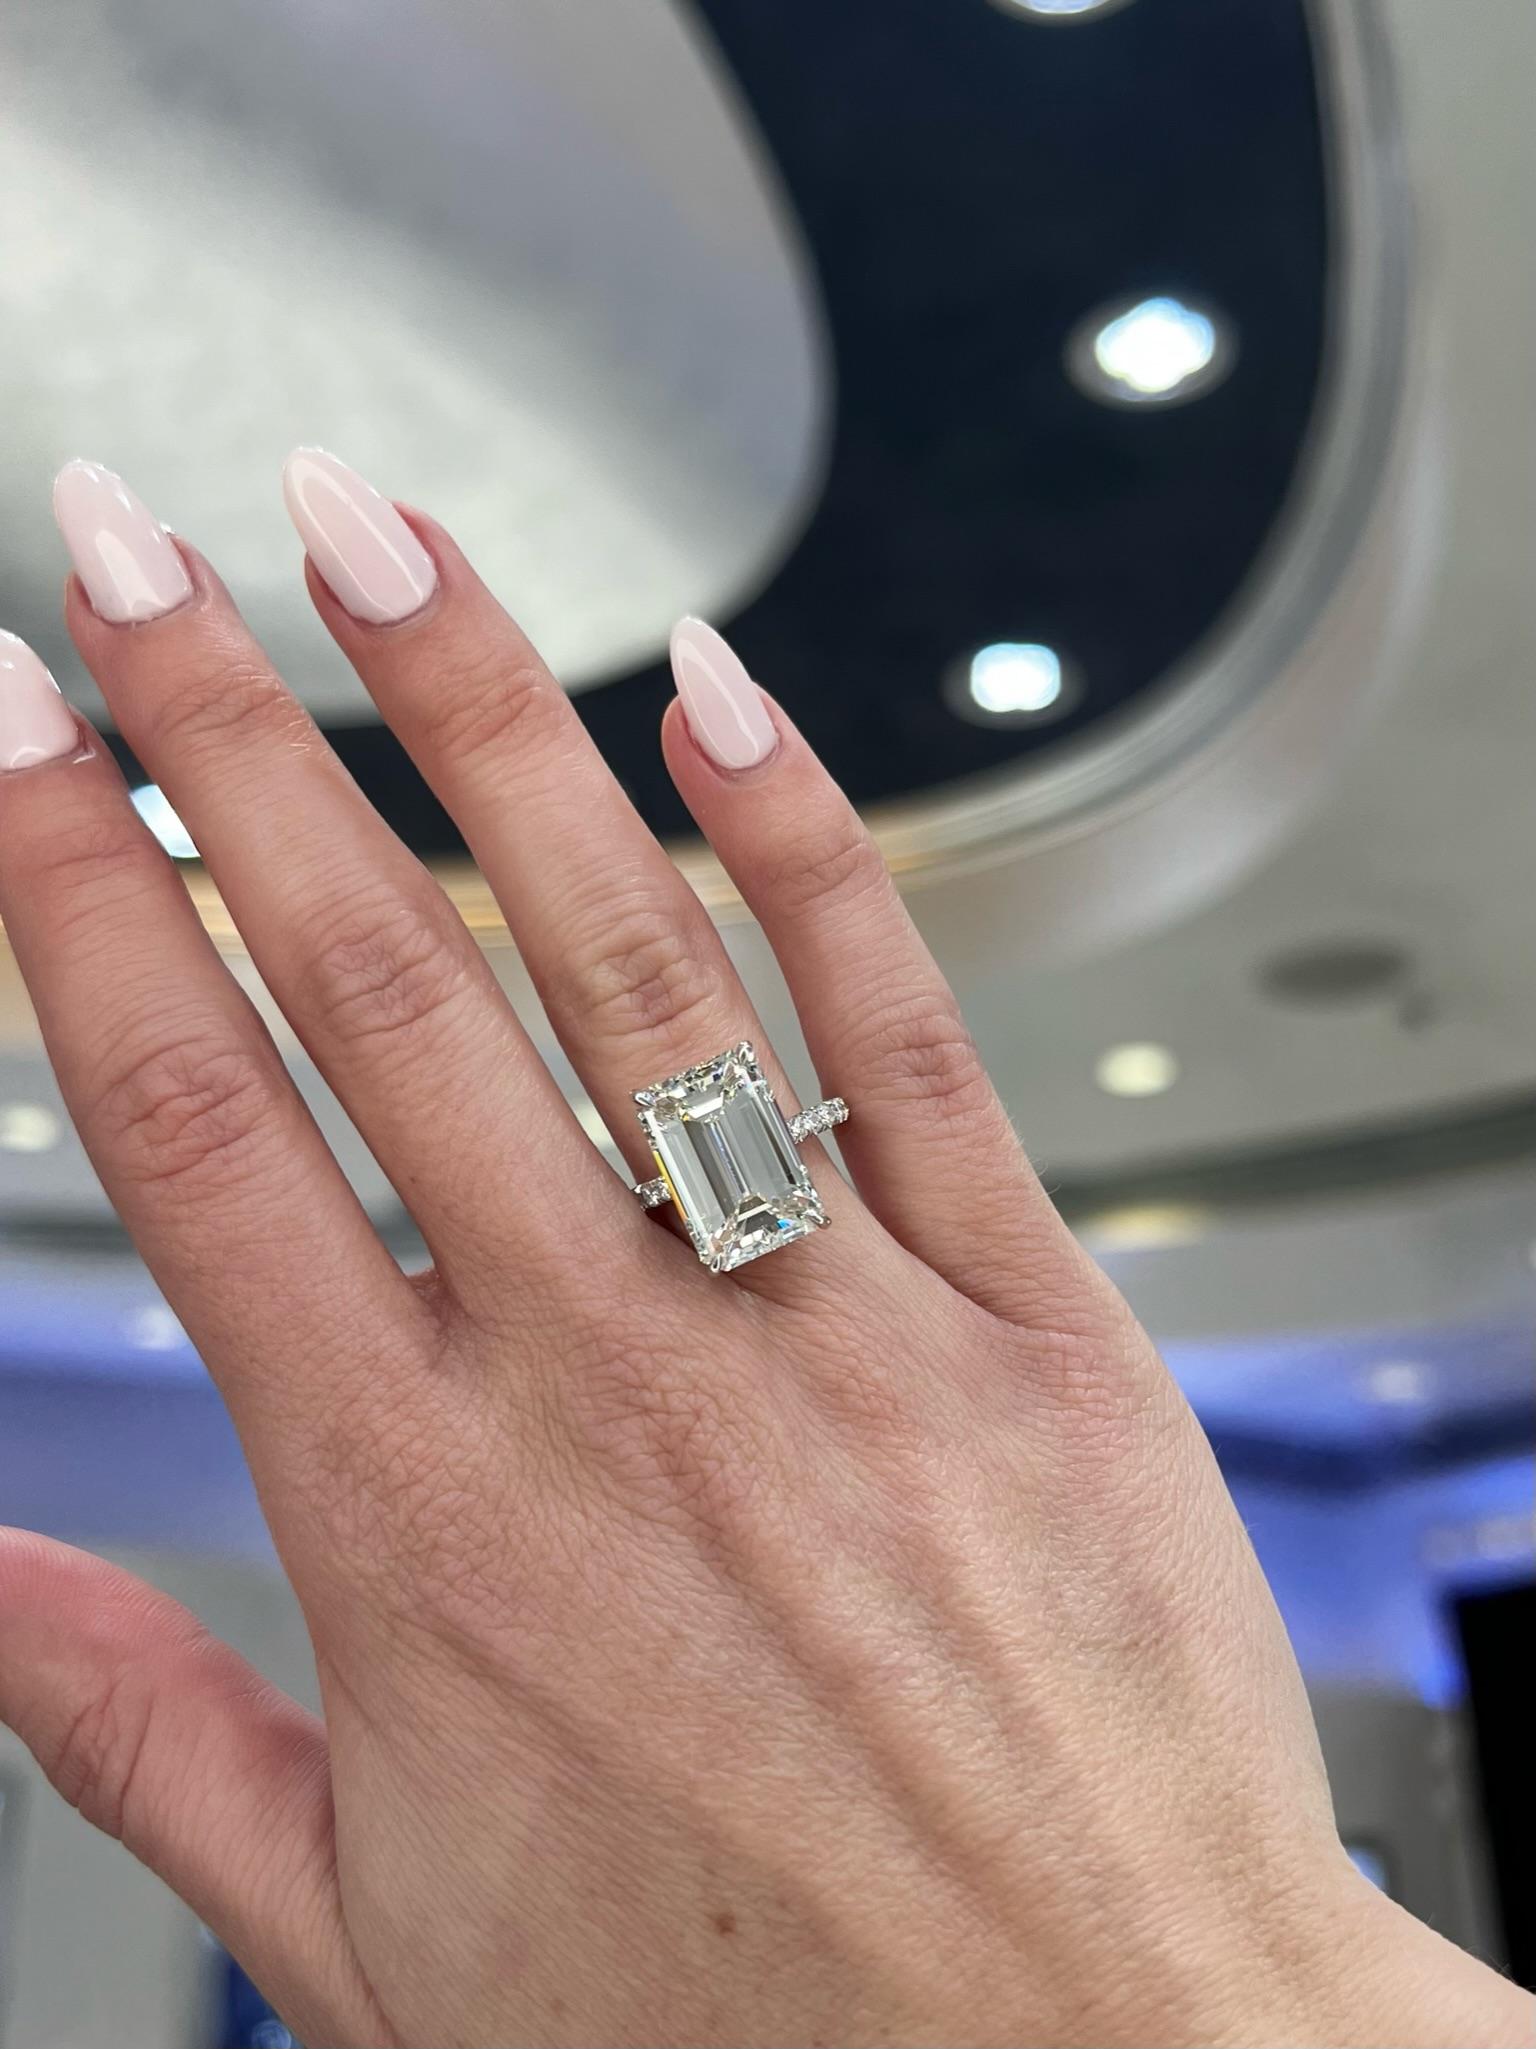 David Rosenberg 10.86 Carat Emerald Cut I VS2 GIA Diamond Engagement Ring For Sale 2